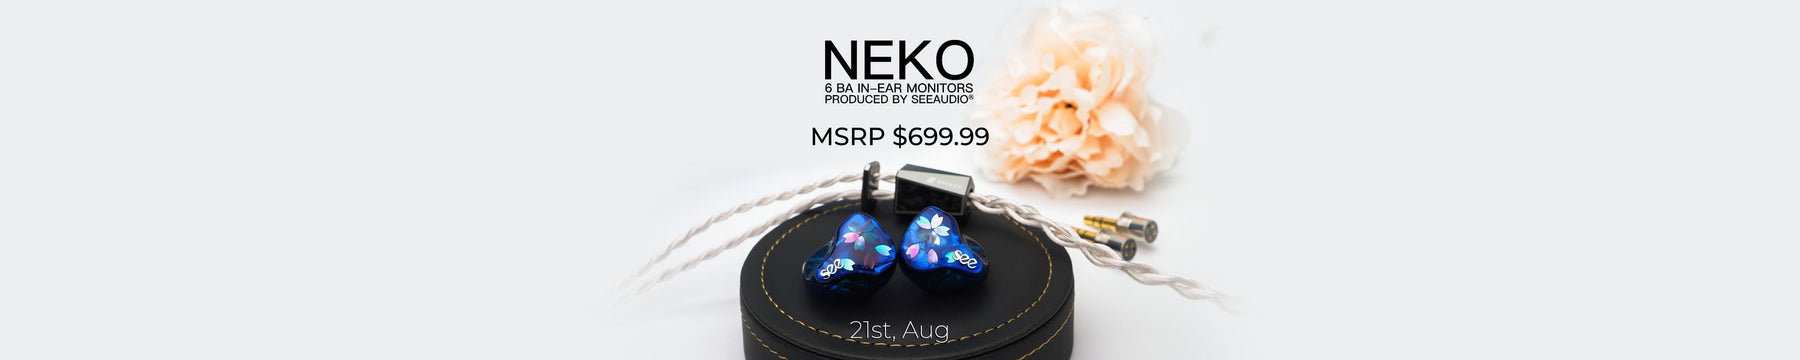 See Audio Introduces "Neko" 6 BA Driver Premium In-Ear Monitors